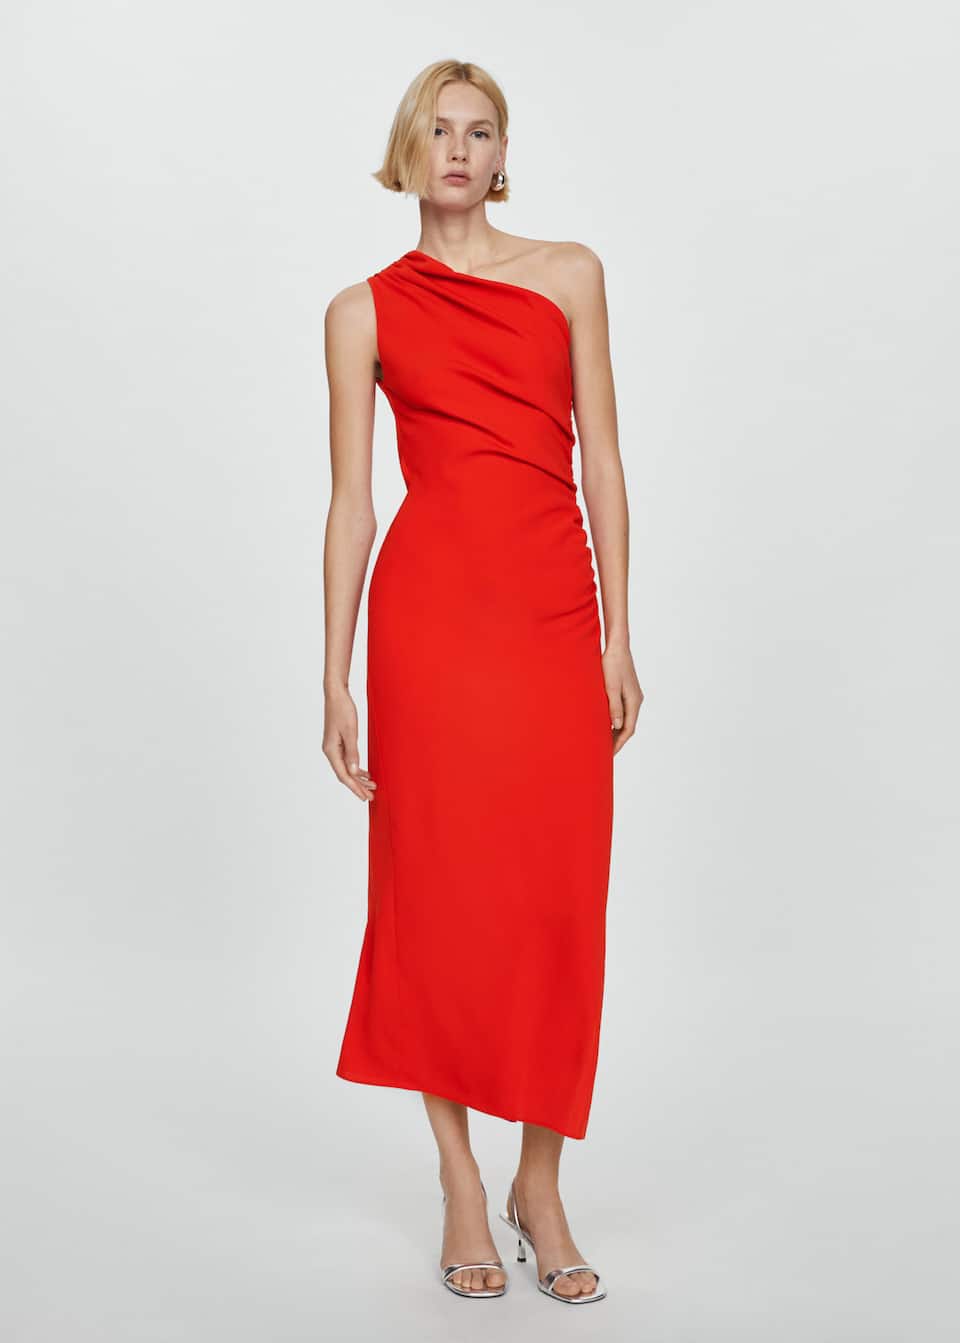 Asymmetrical dress with side slit red dress